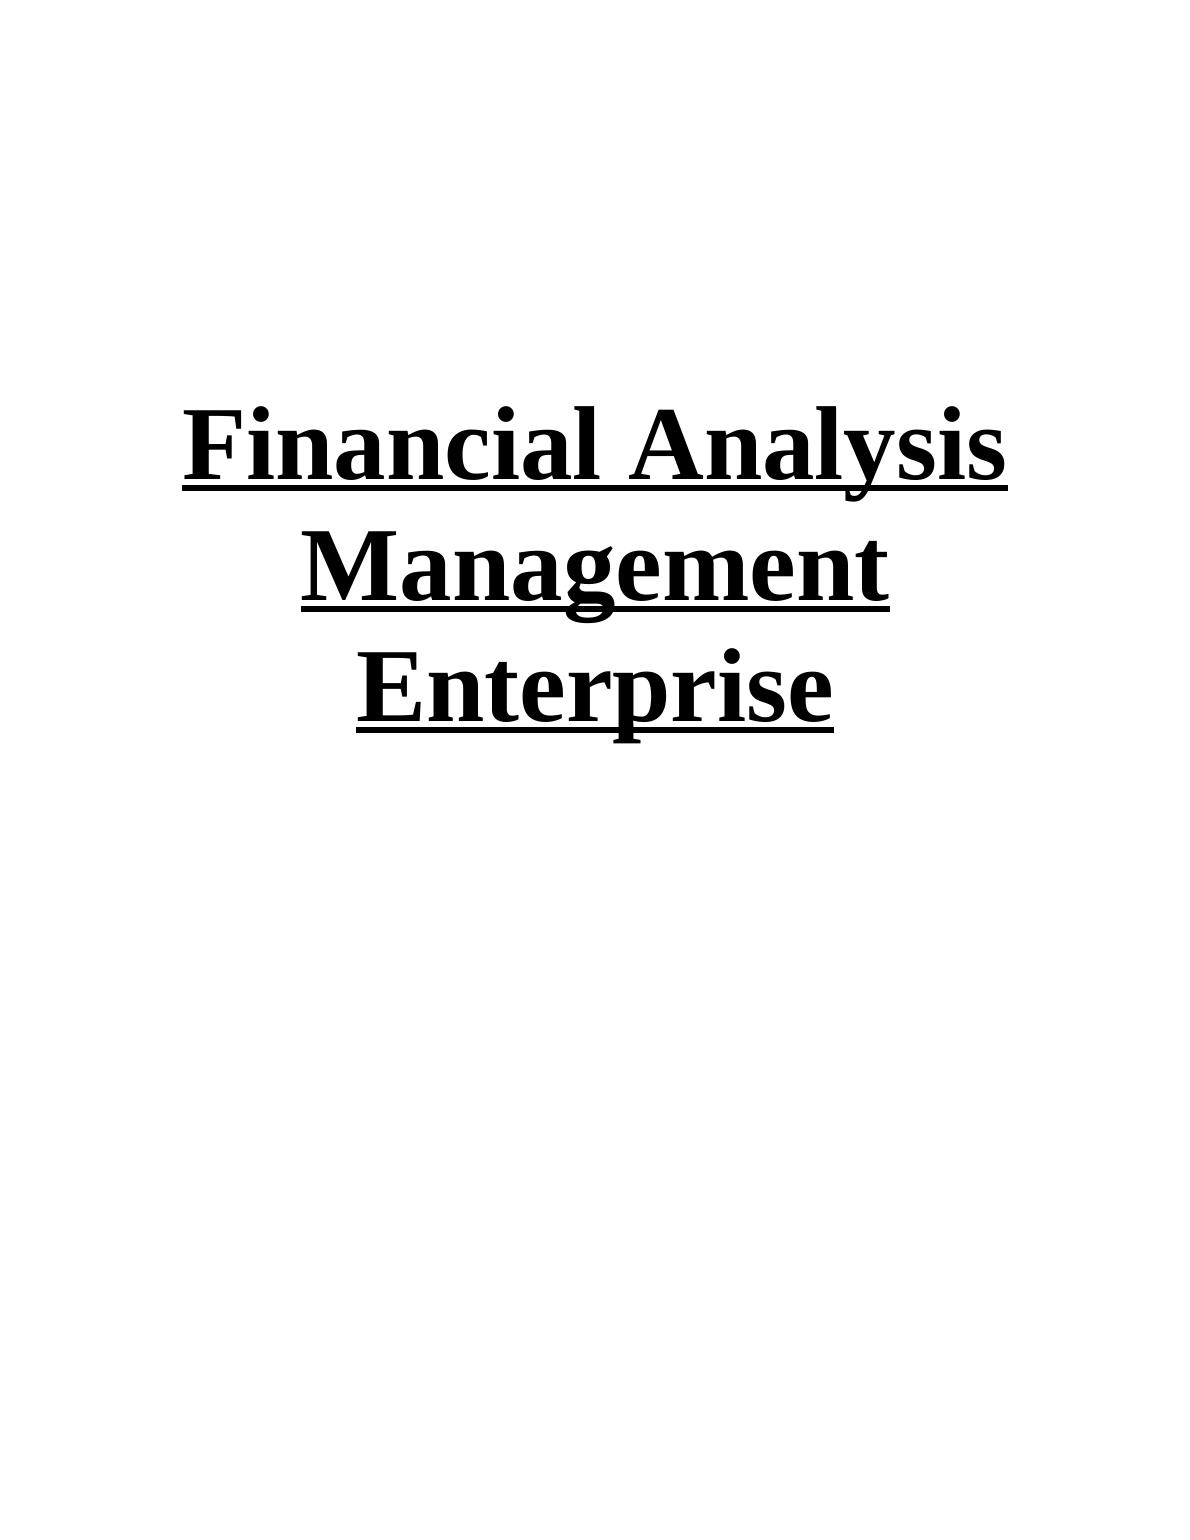 Financial Analysis Management & Enterprise_1